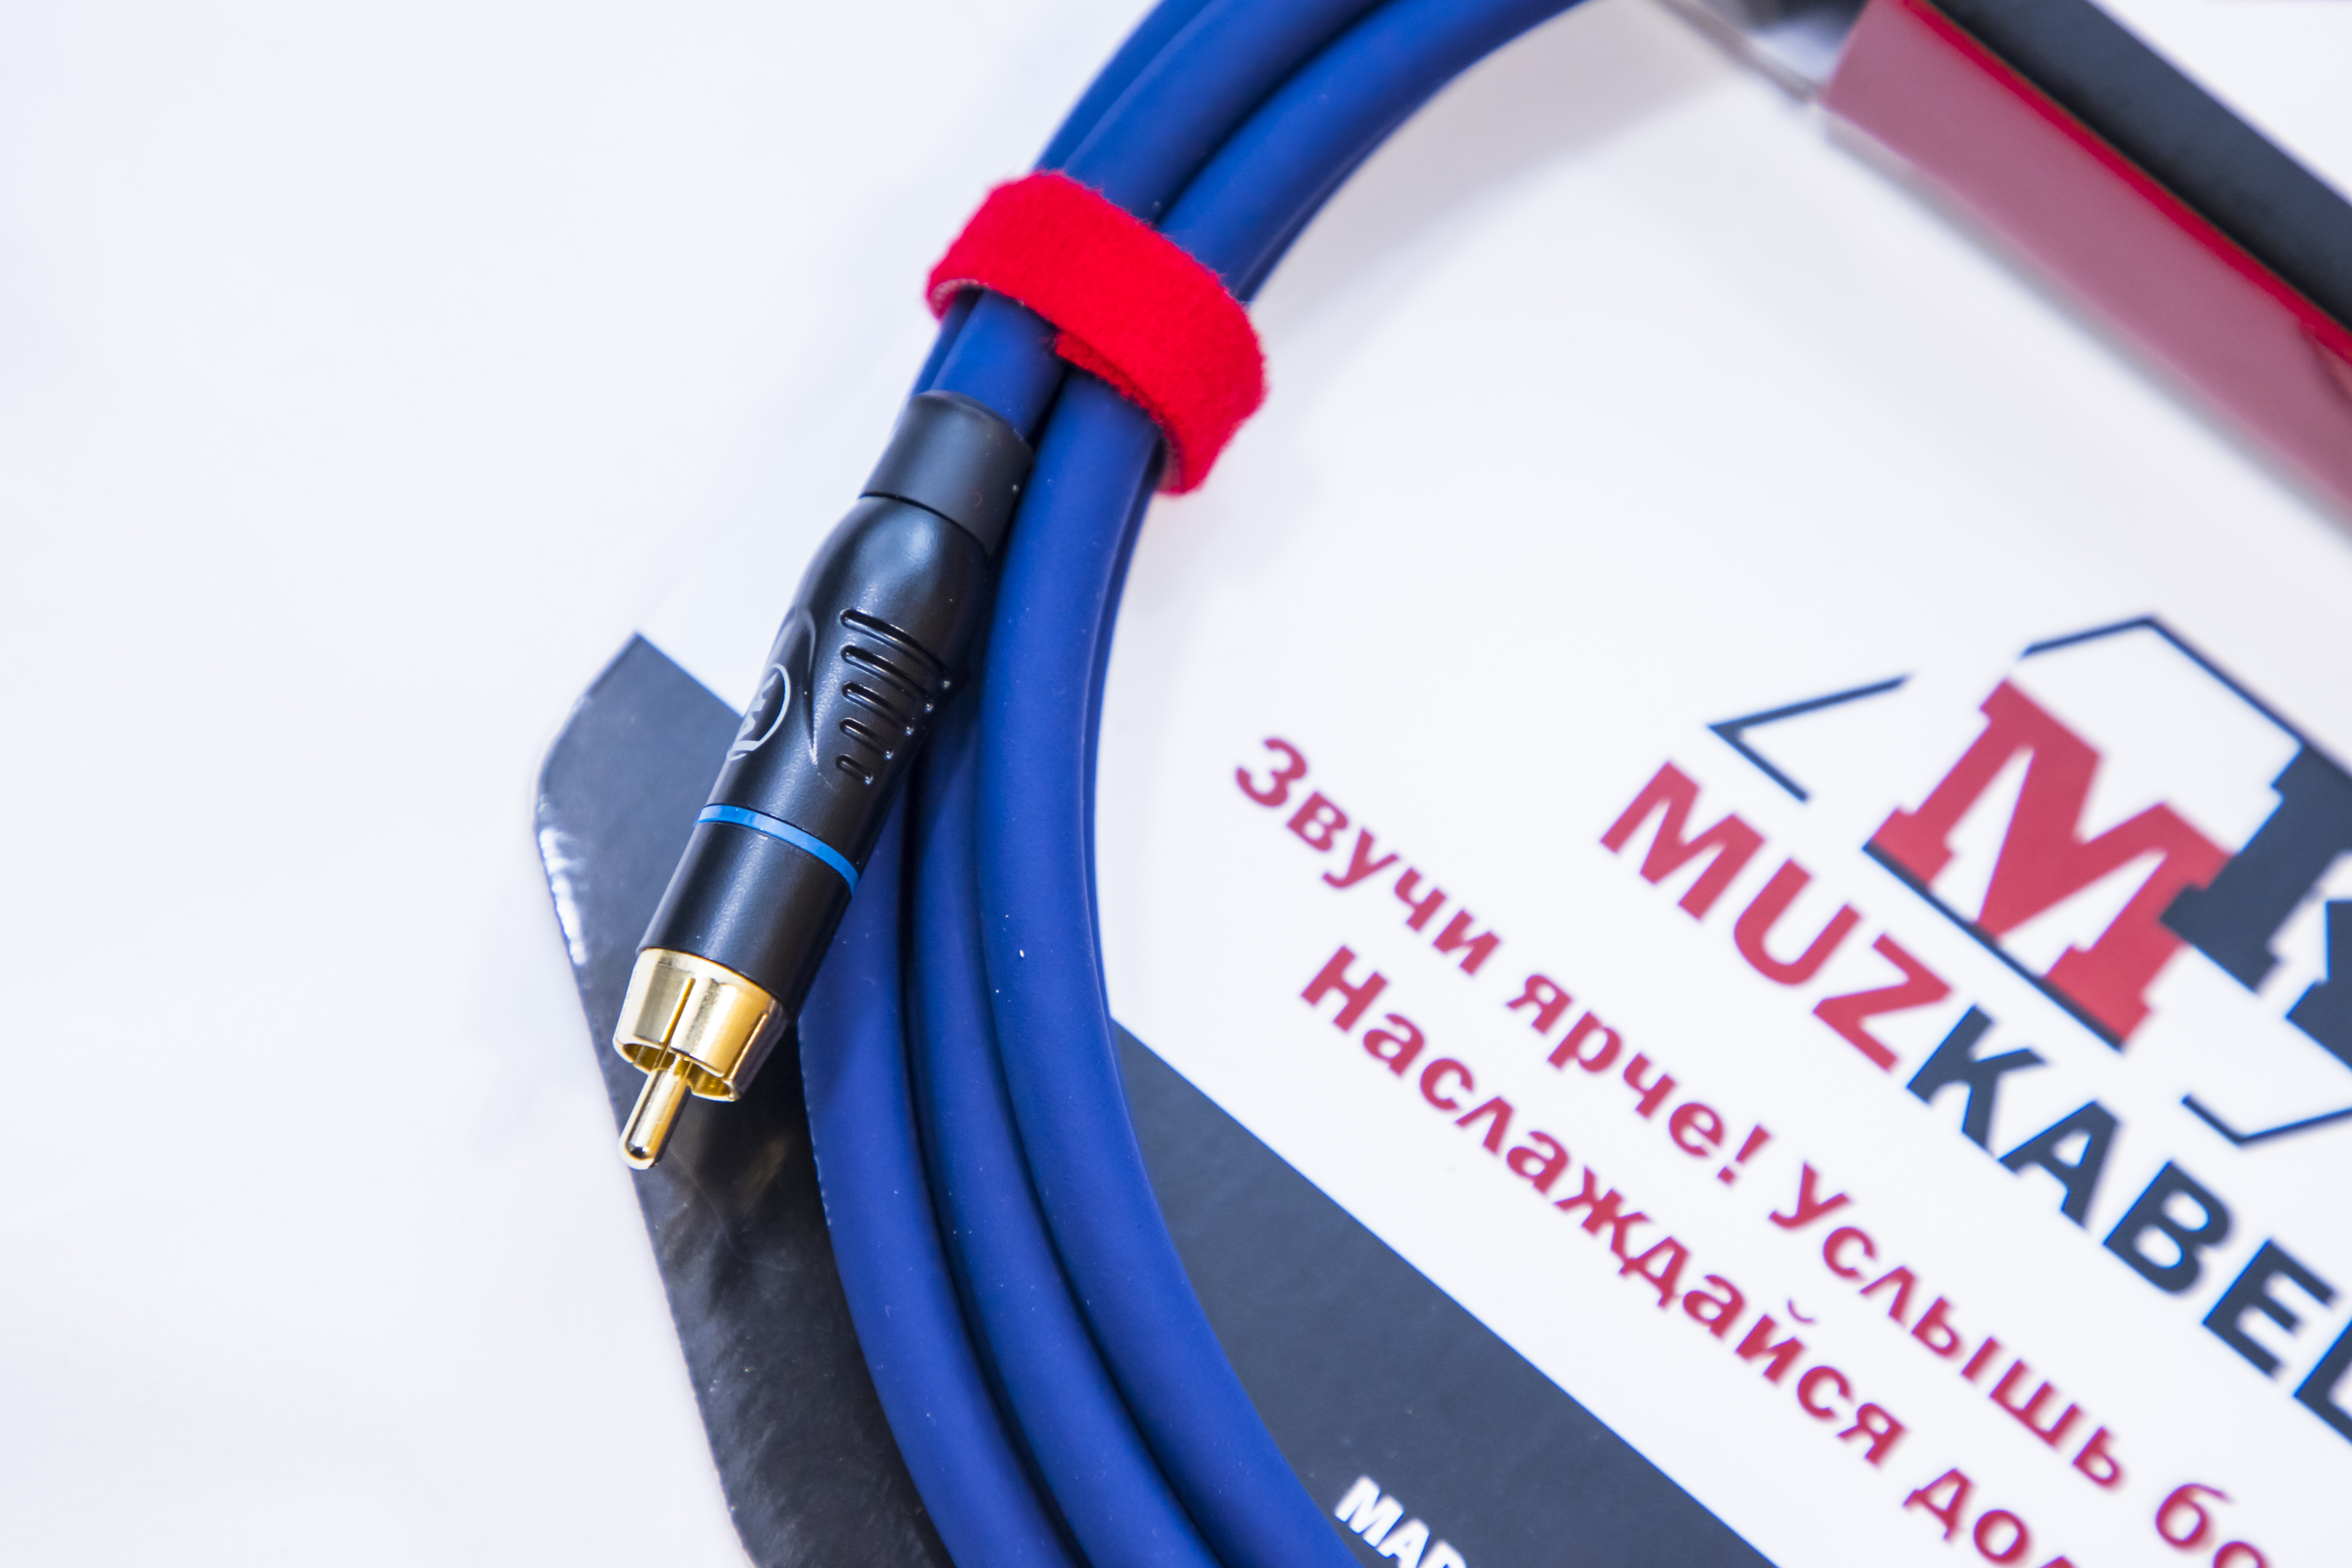 Аудио кабель MUZKABEL RRFMK1S - 1,5 метра, RCA – RCA